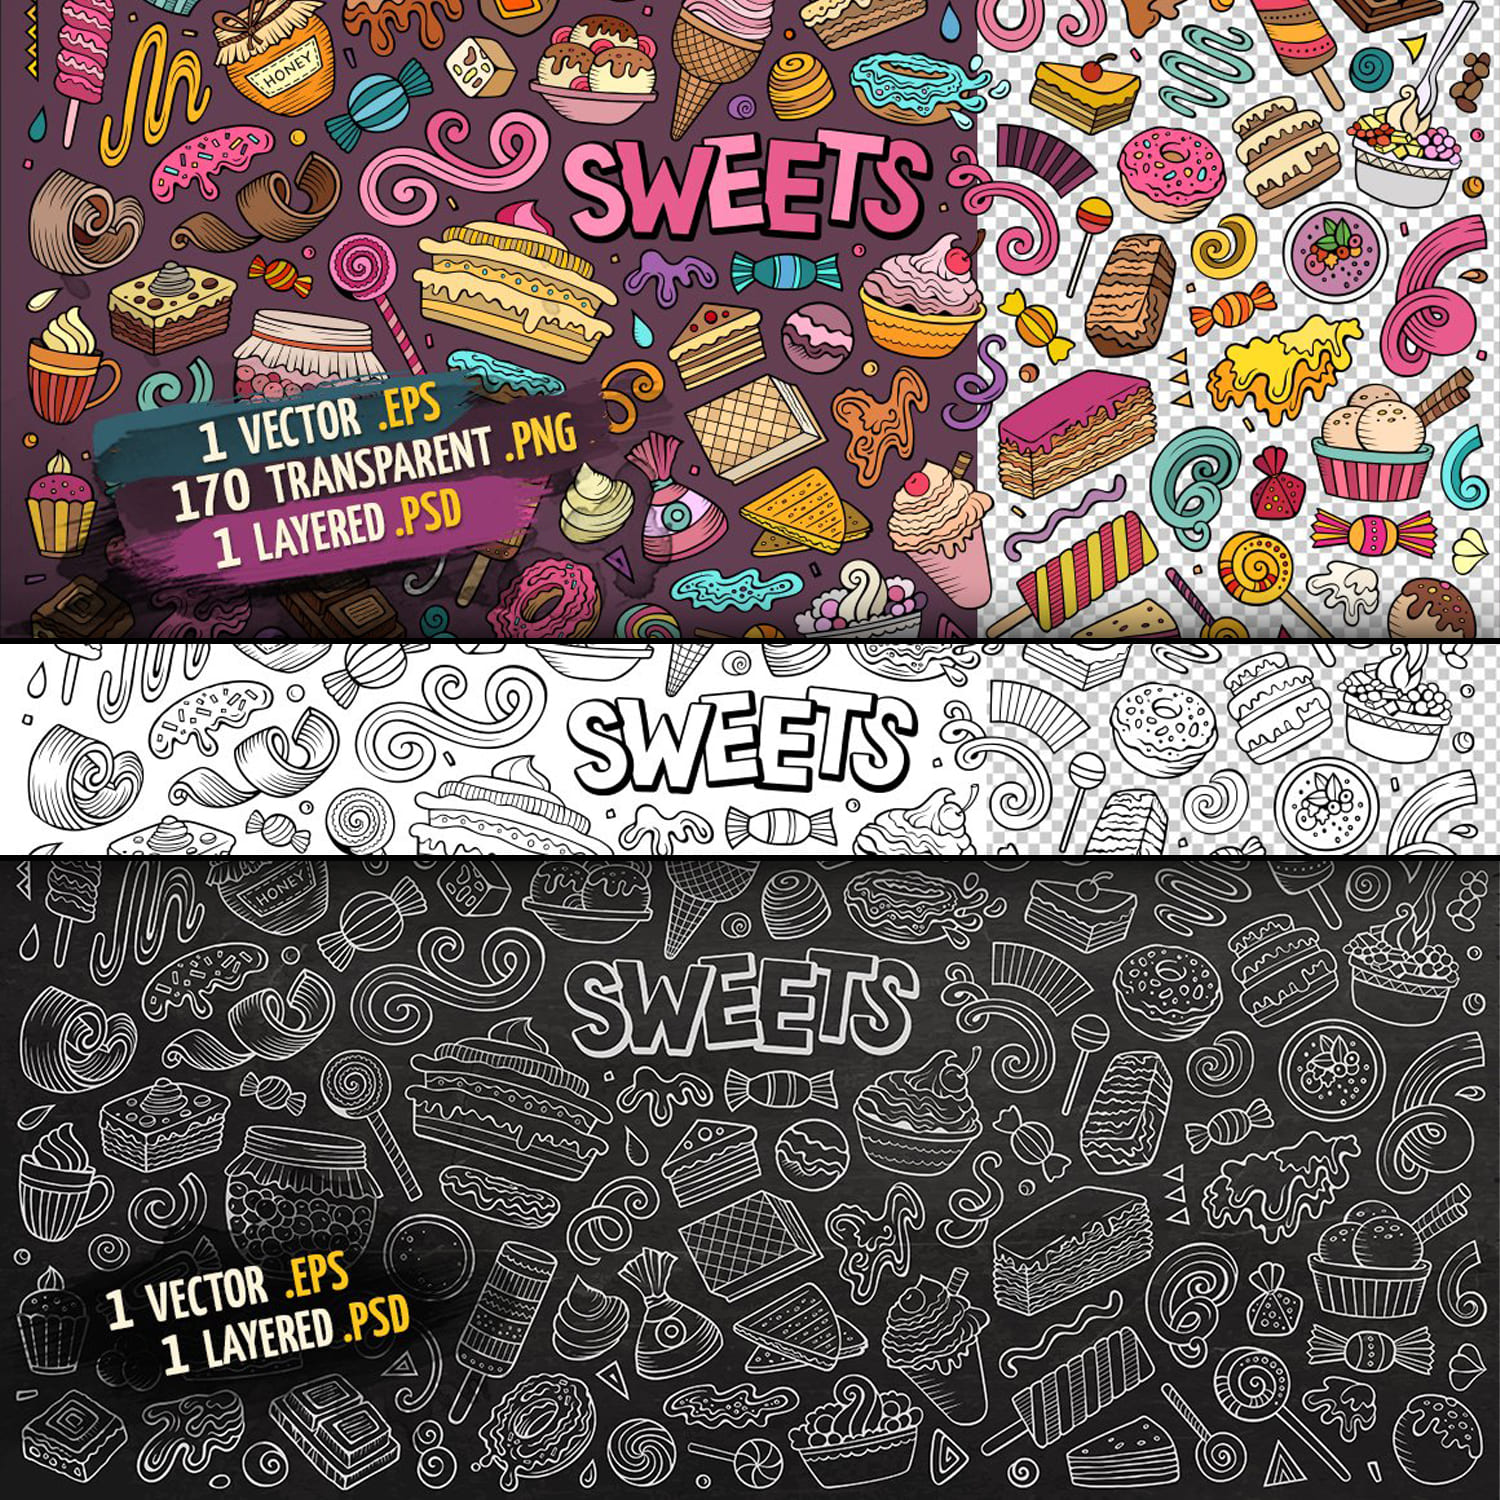 Sweets Objects Symbols Set 1500 1500 2.